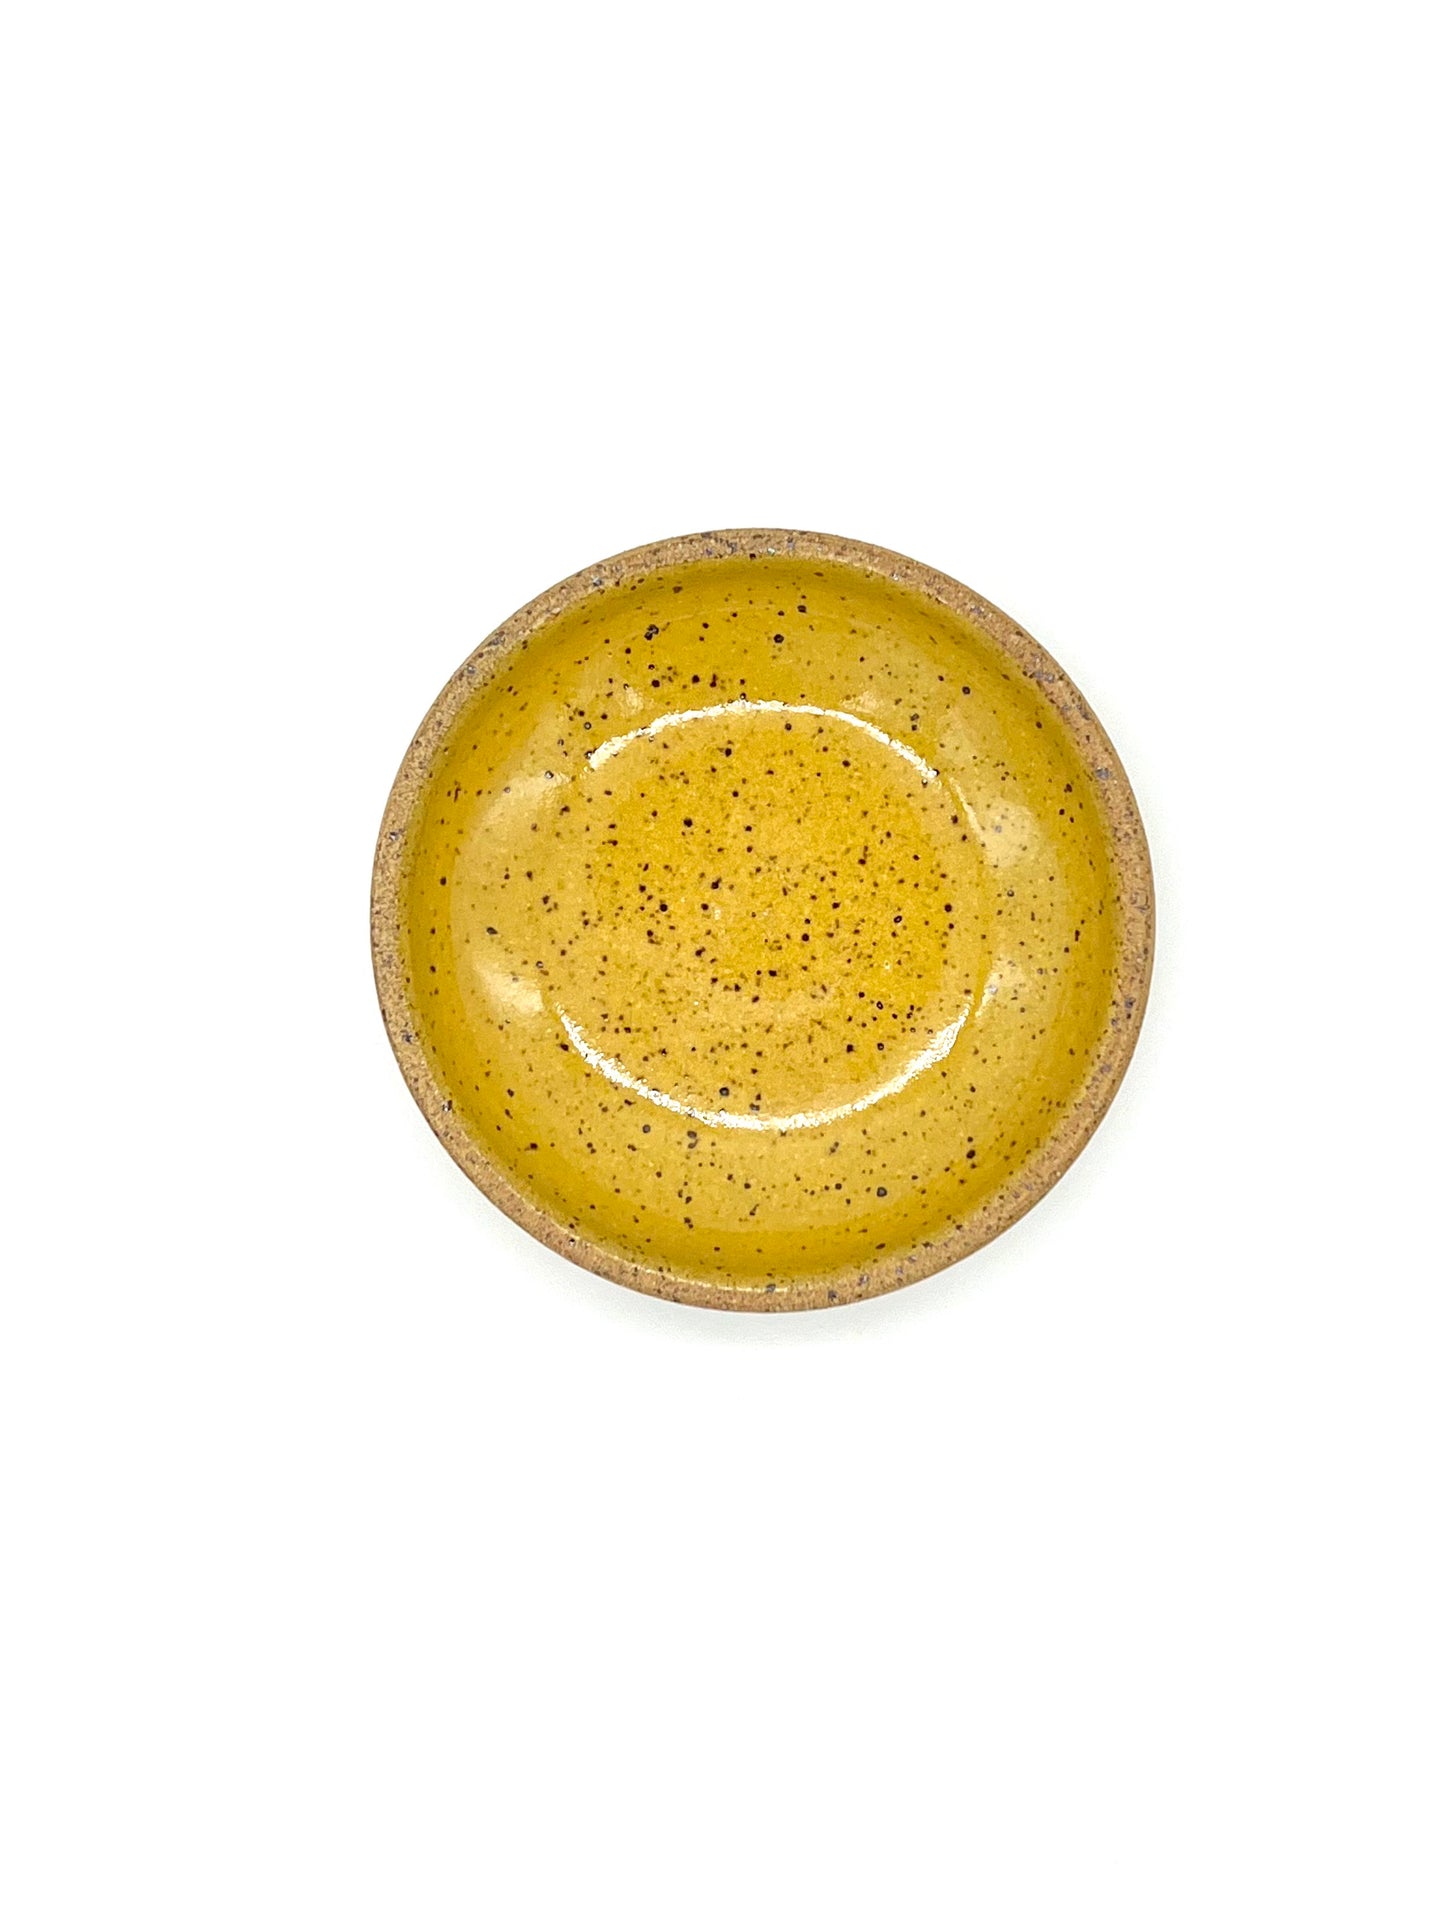 Spice/Tea Bag/Trinket Dish - Yellow Speckle